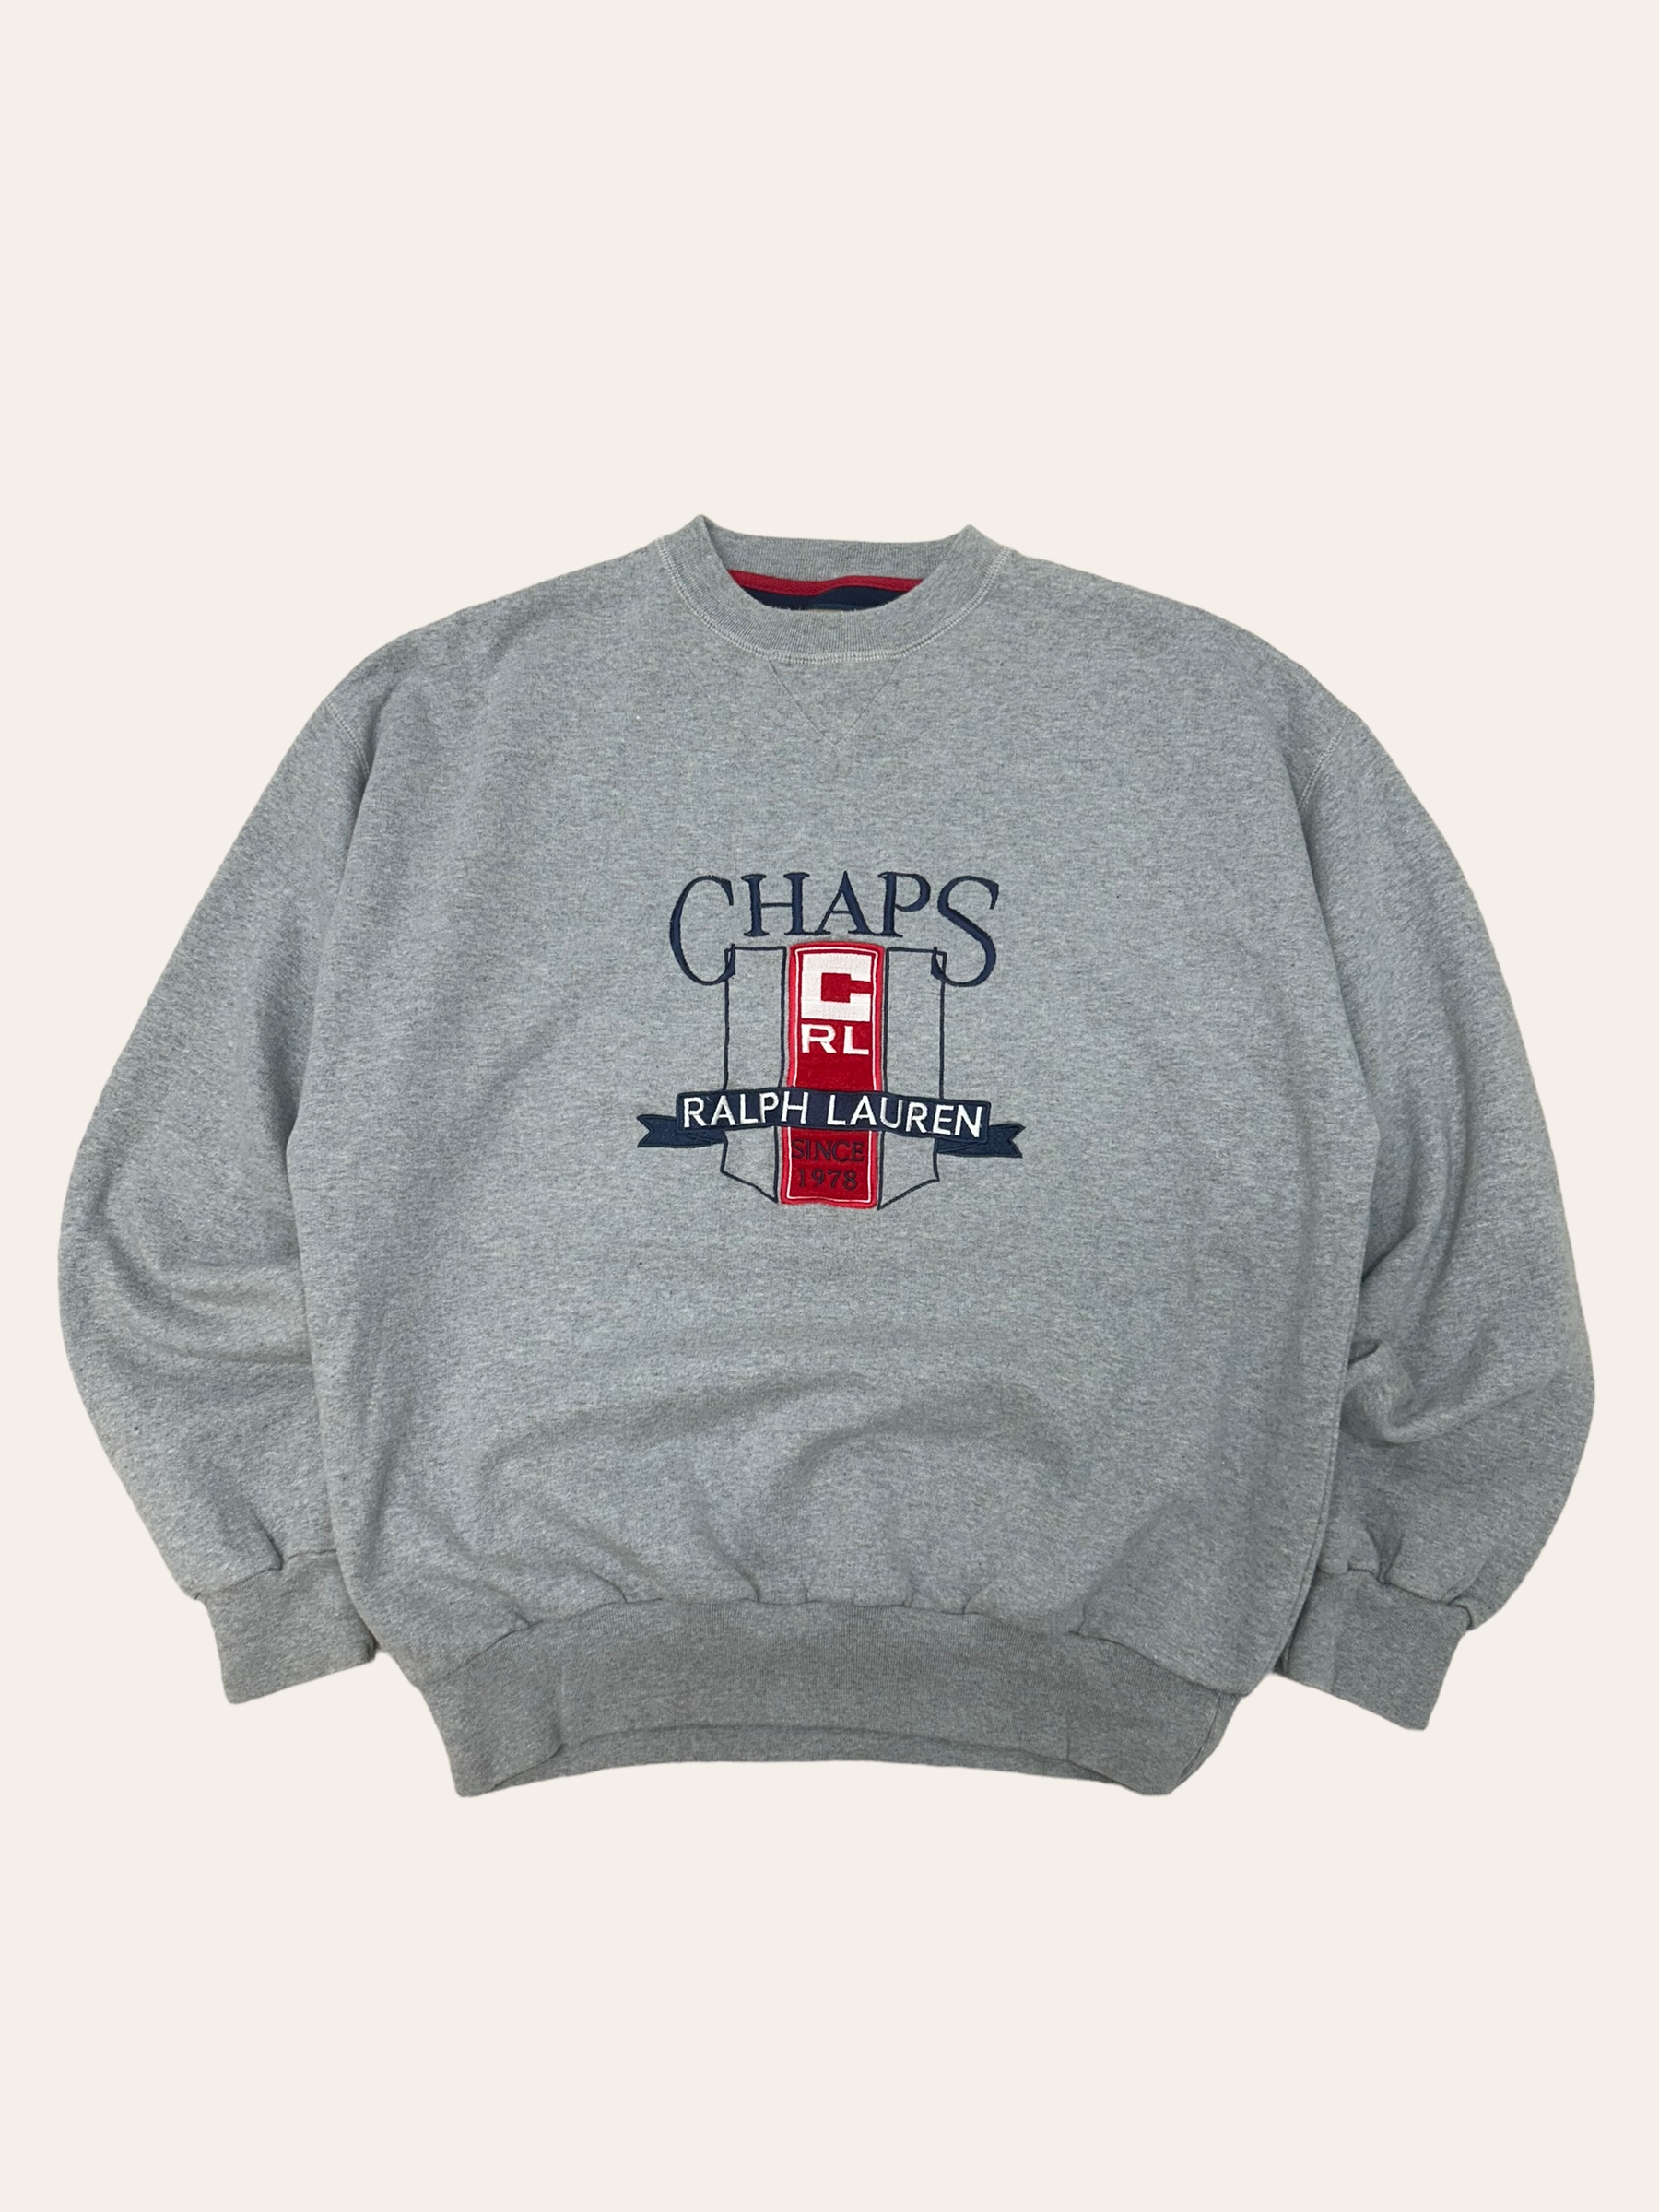 Chaps ralph lauren gray embroidered sweatshirt M